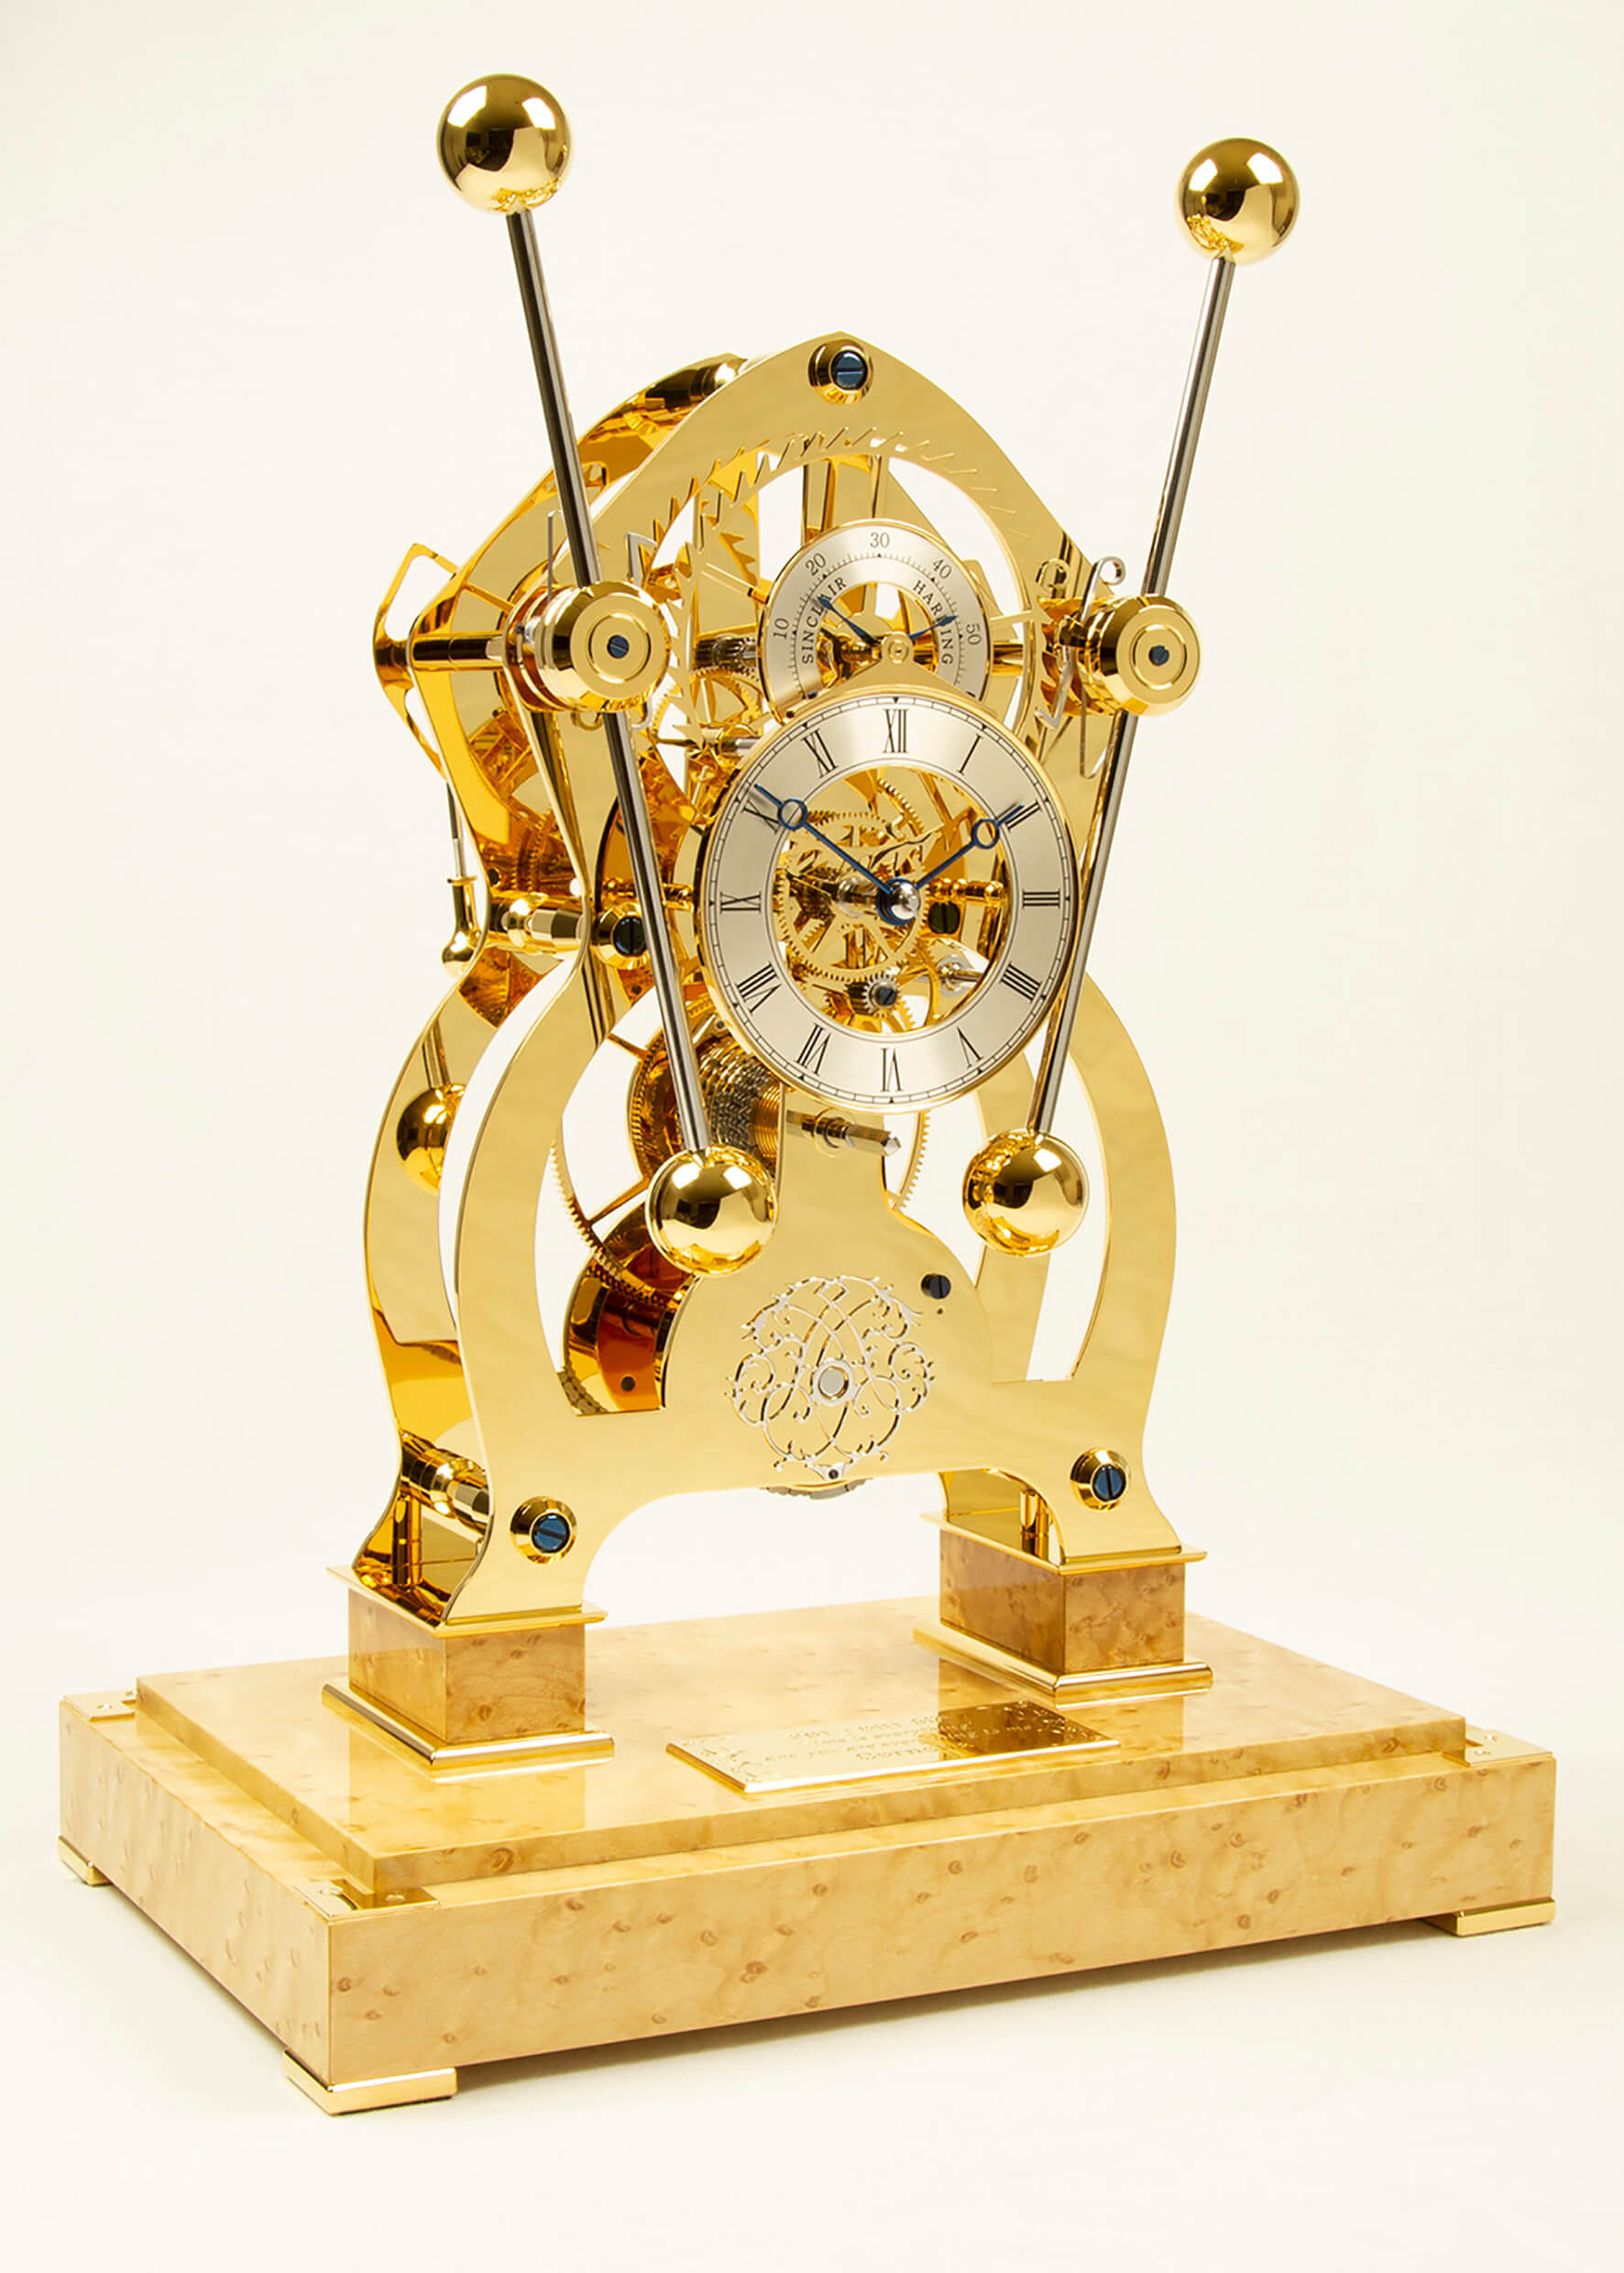 Sinclair Harding Tischuhr "His" Sea Clock vergoldet, Vogelaugenahorn Sockel